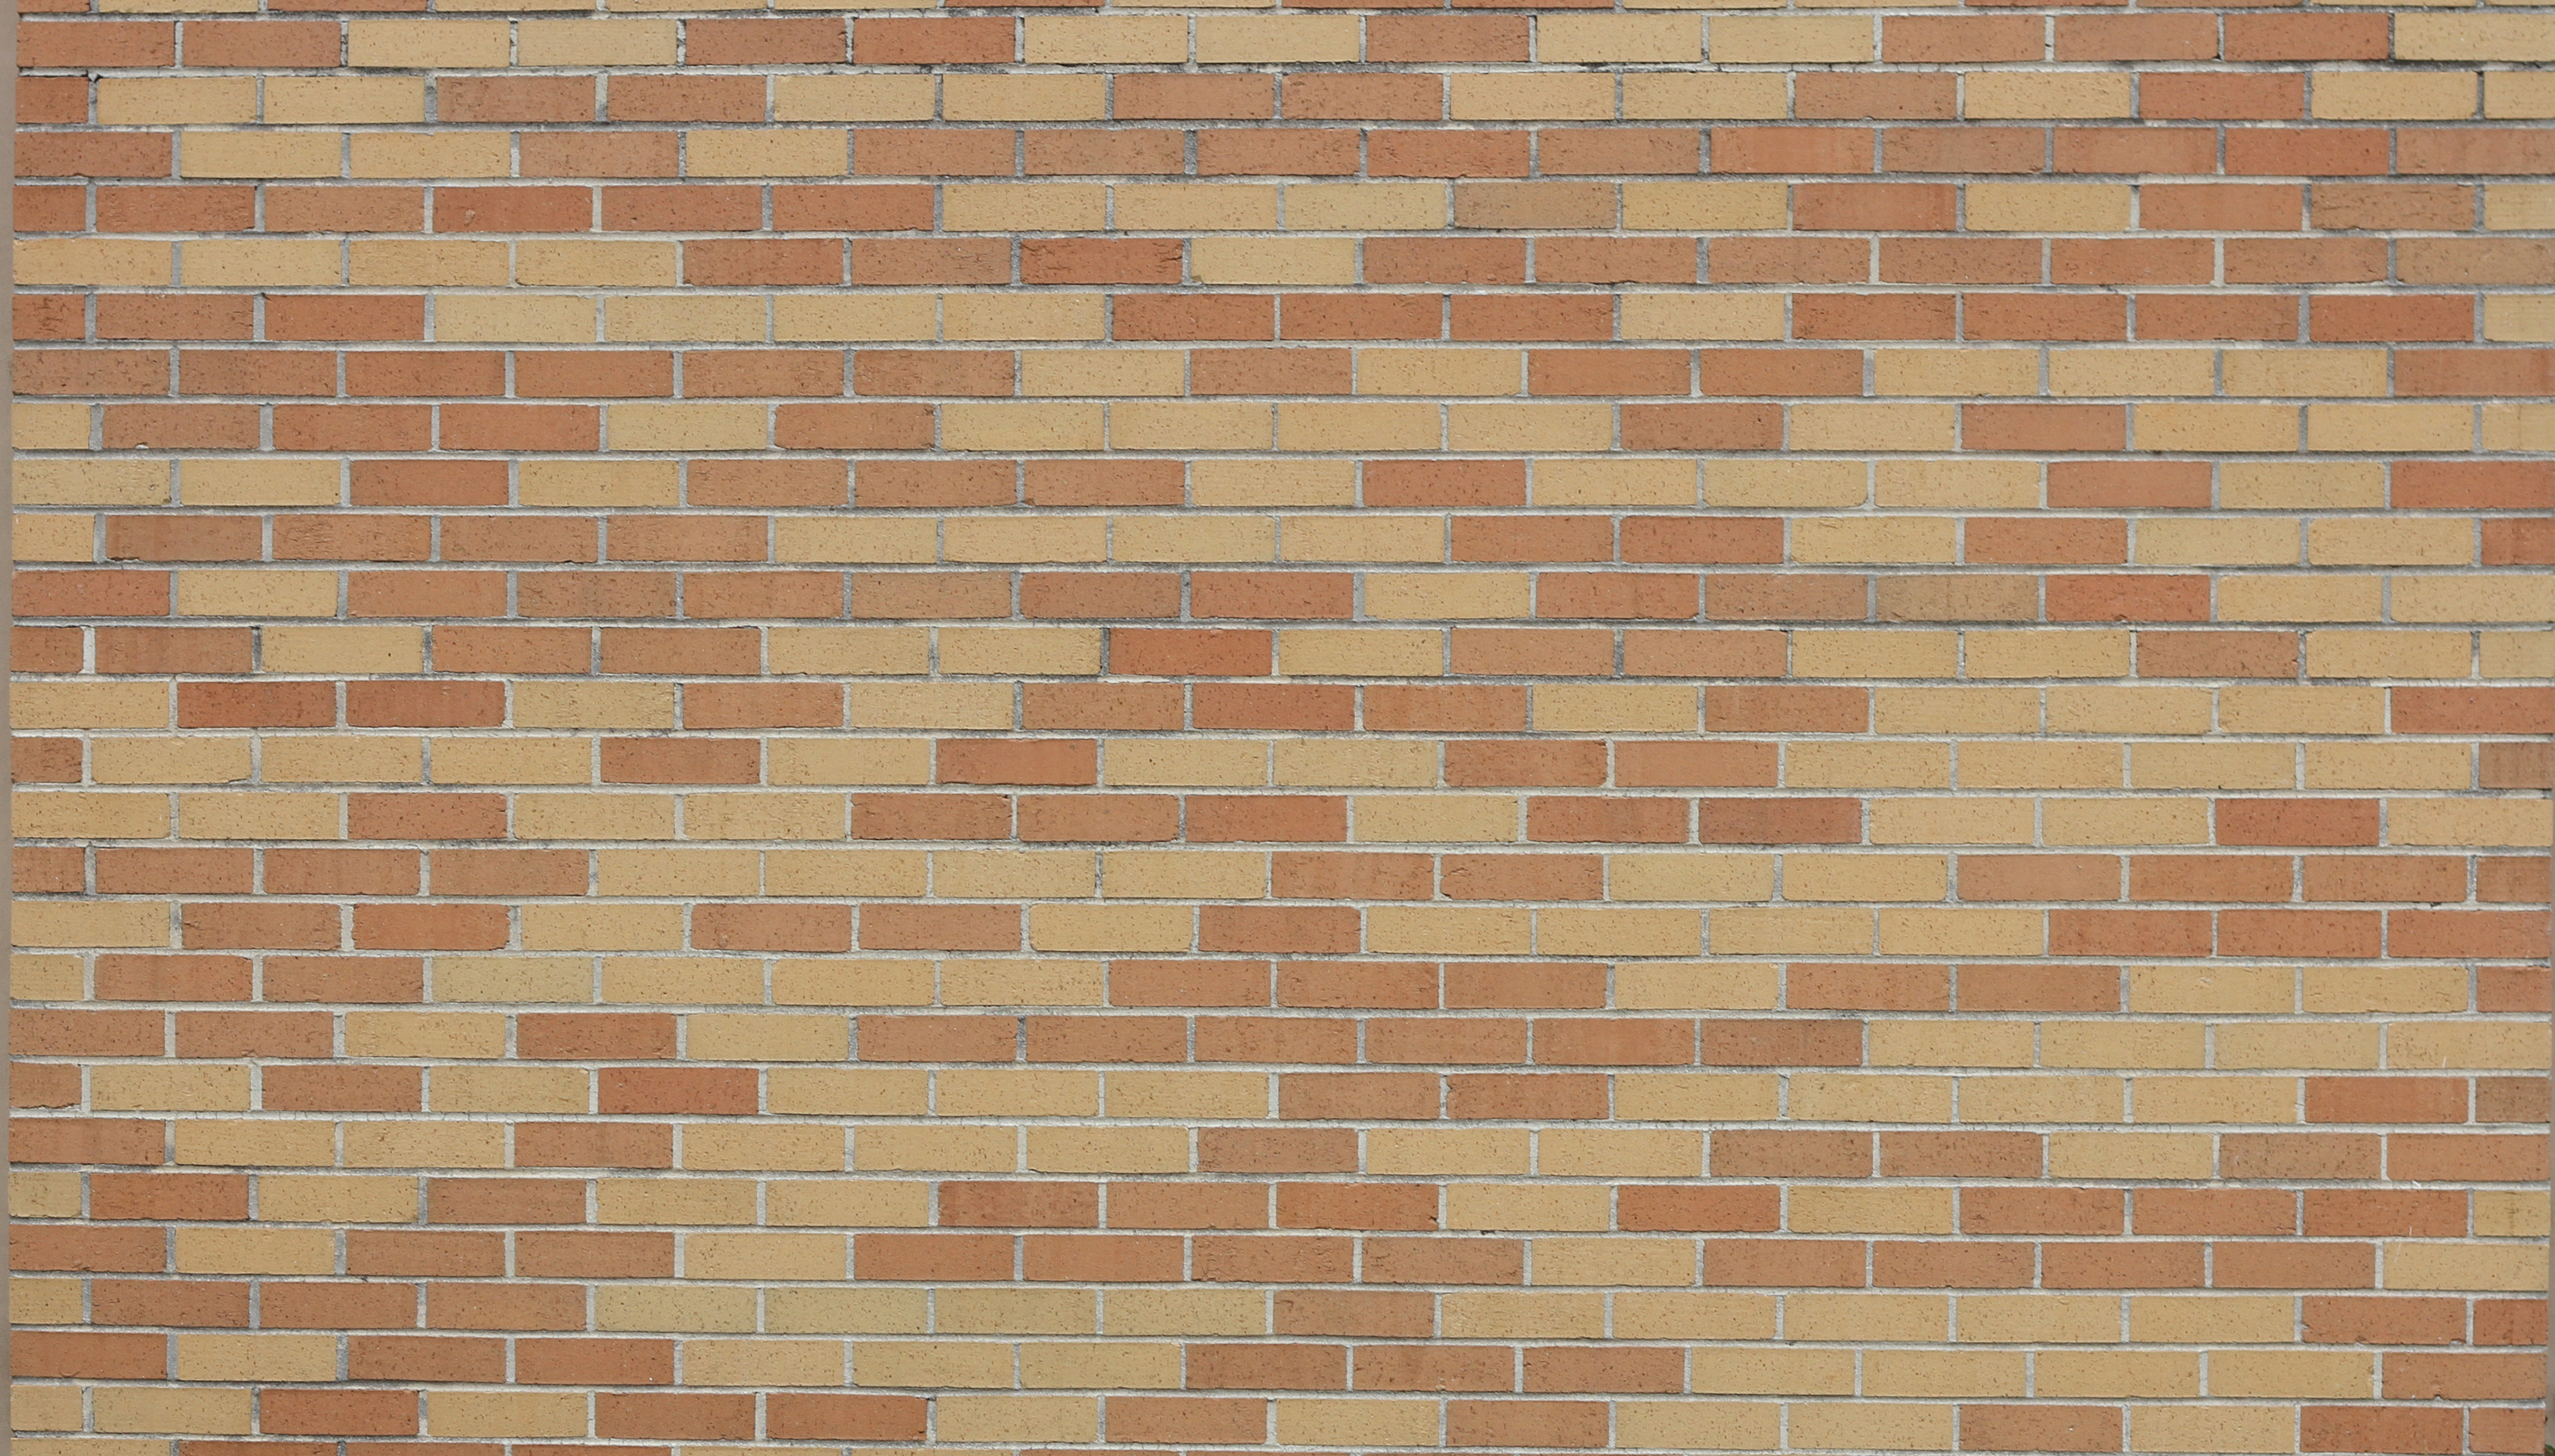 Brown and Tan Brick Wall Texture - 1 4 textures